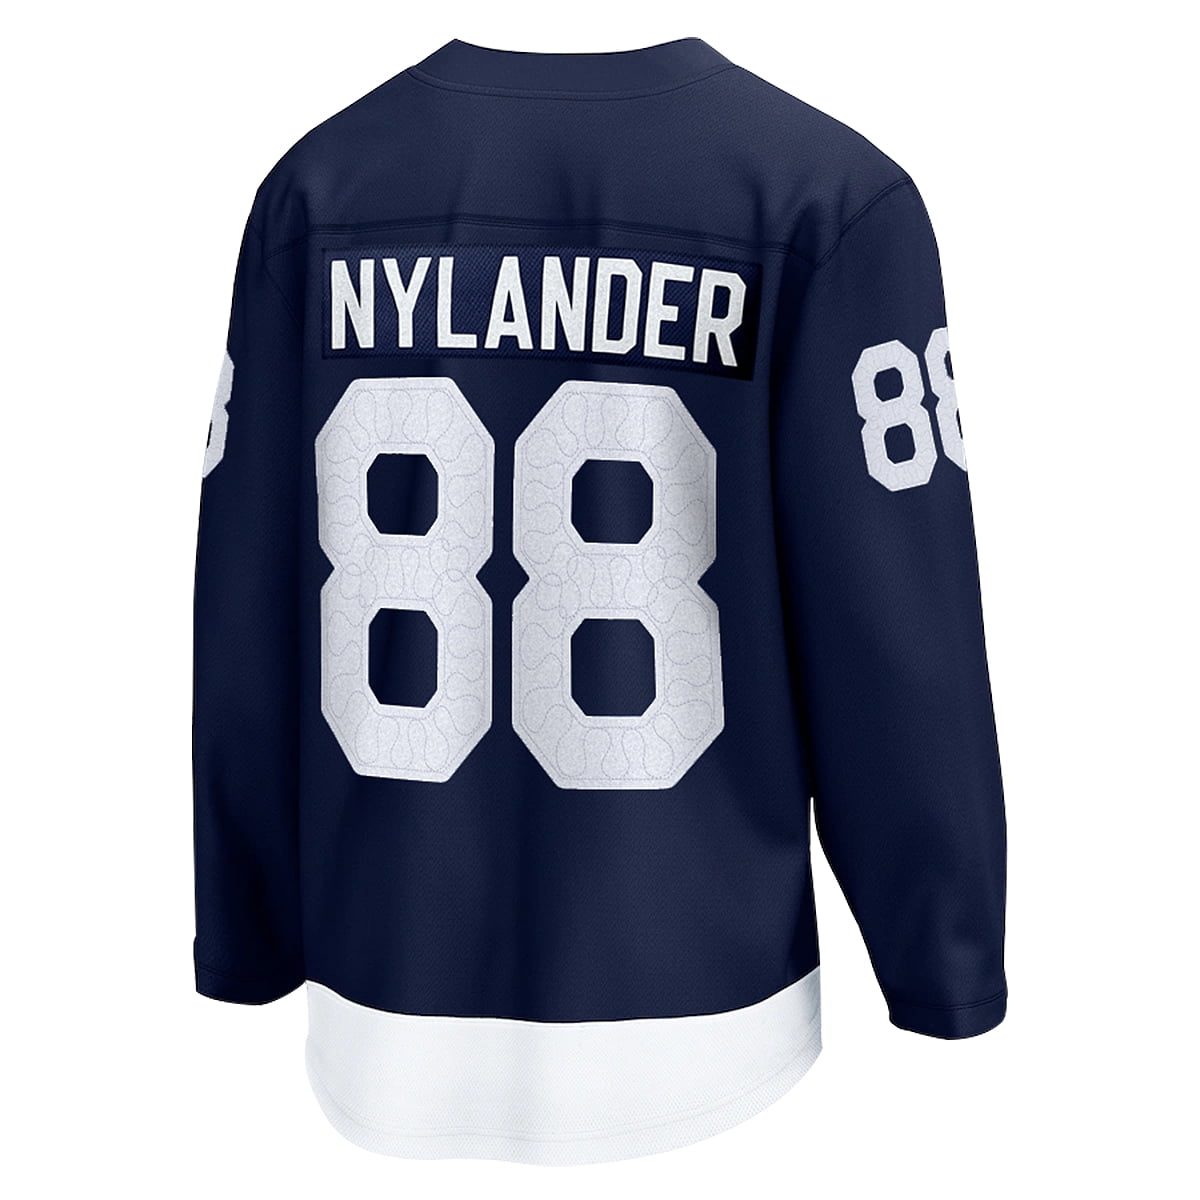 William Nylander Toronto Maple Leafs Jerseys, Maple Leafs Jersey Deals,  Maple Leafs Breakaway Jerseys, Maple Leafs Hockey Sweater